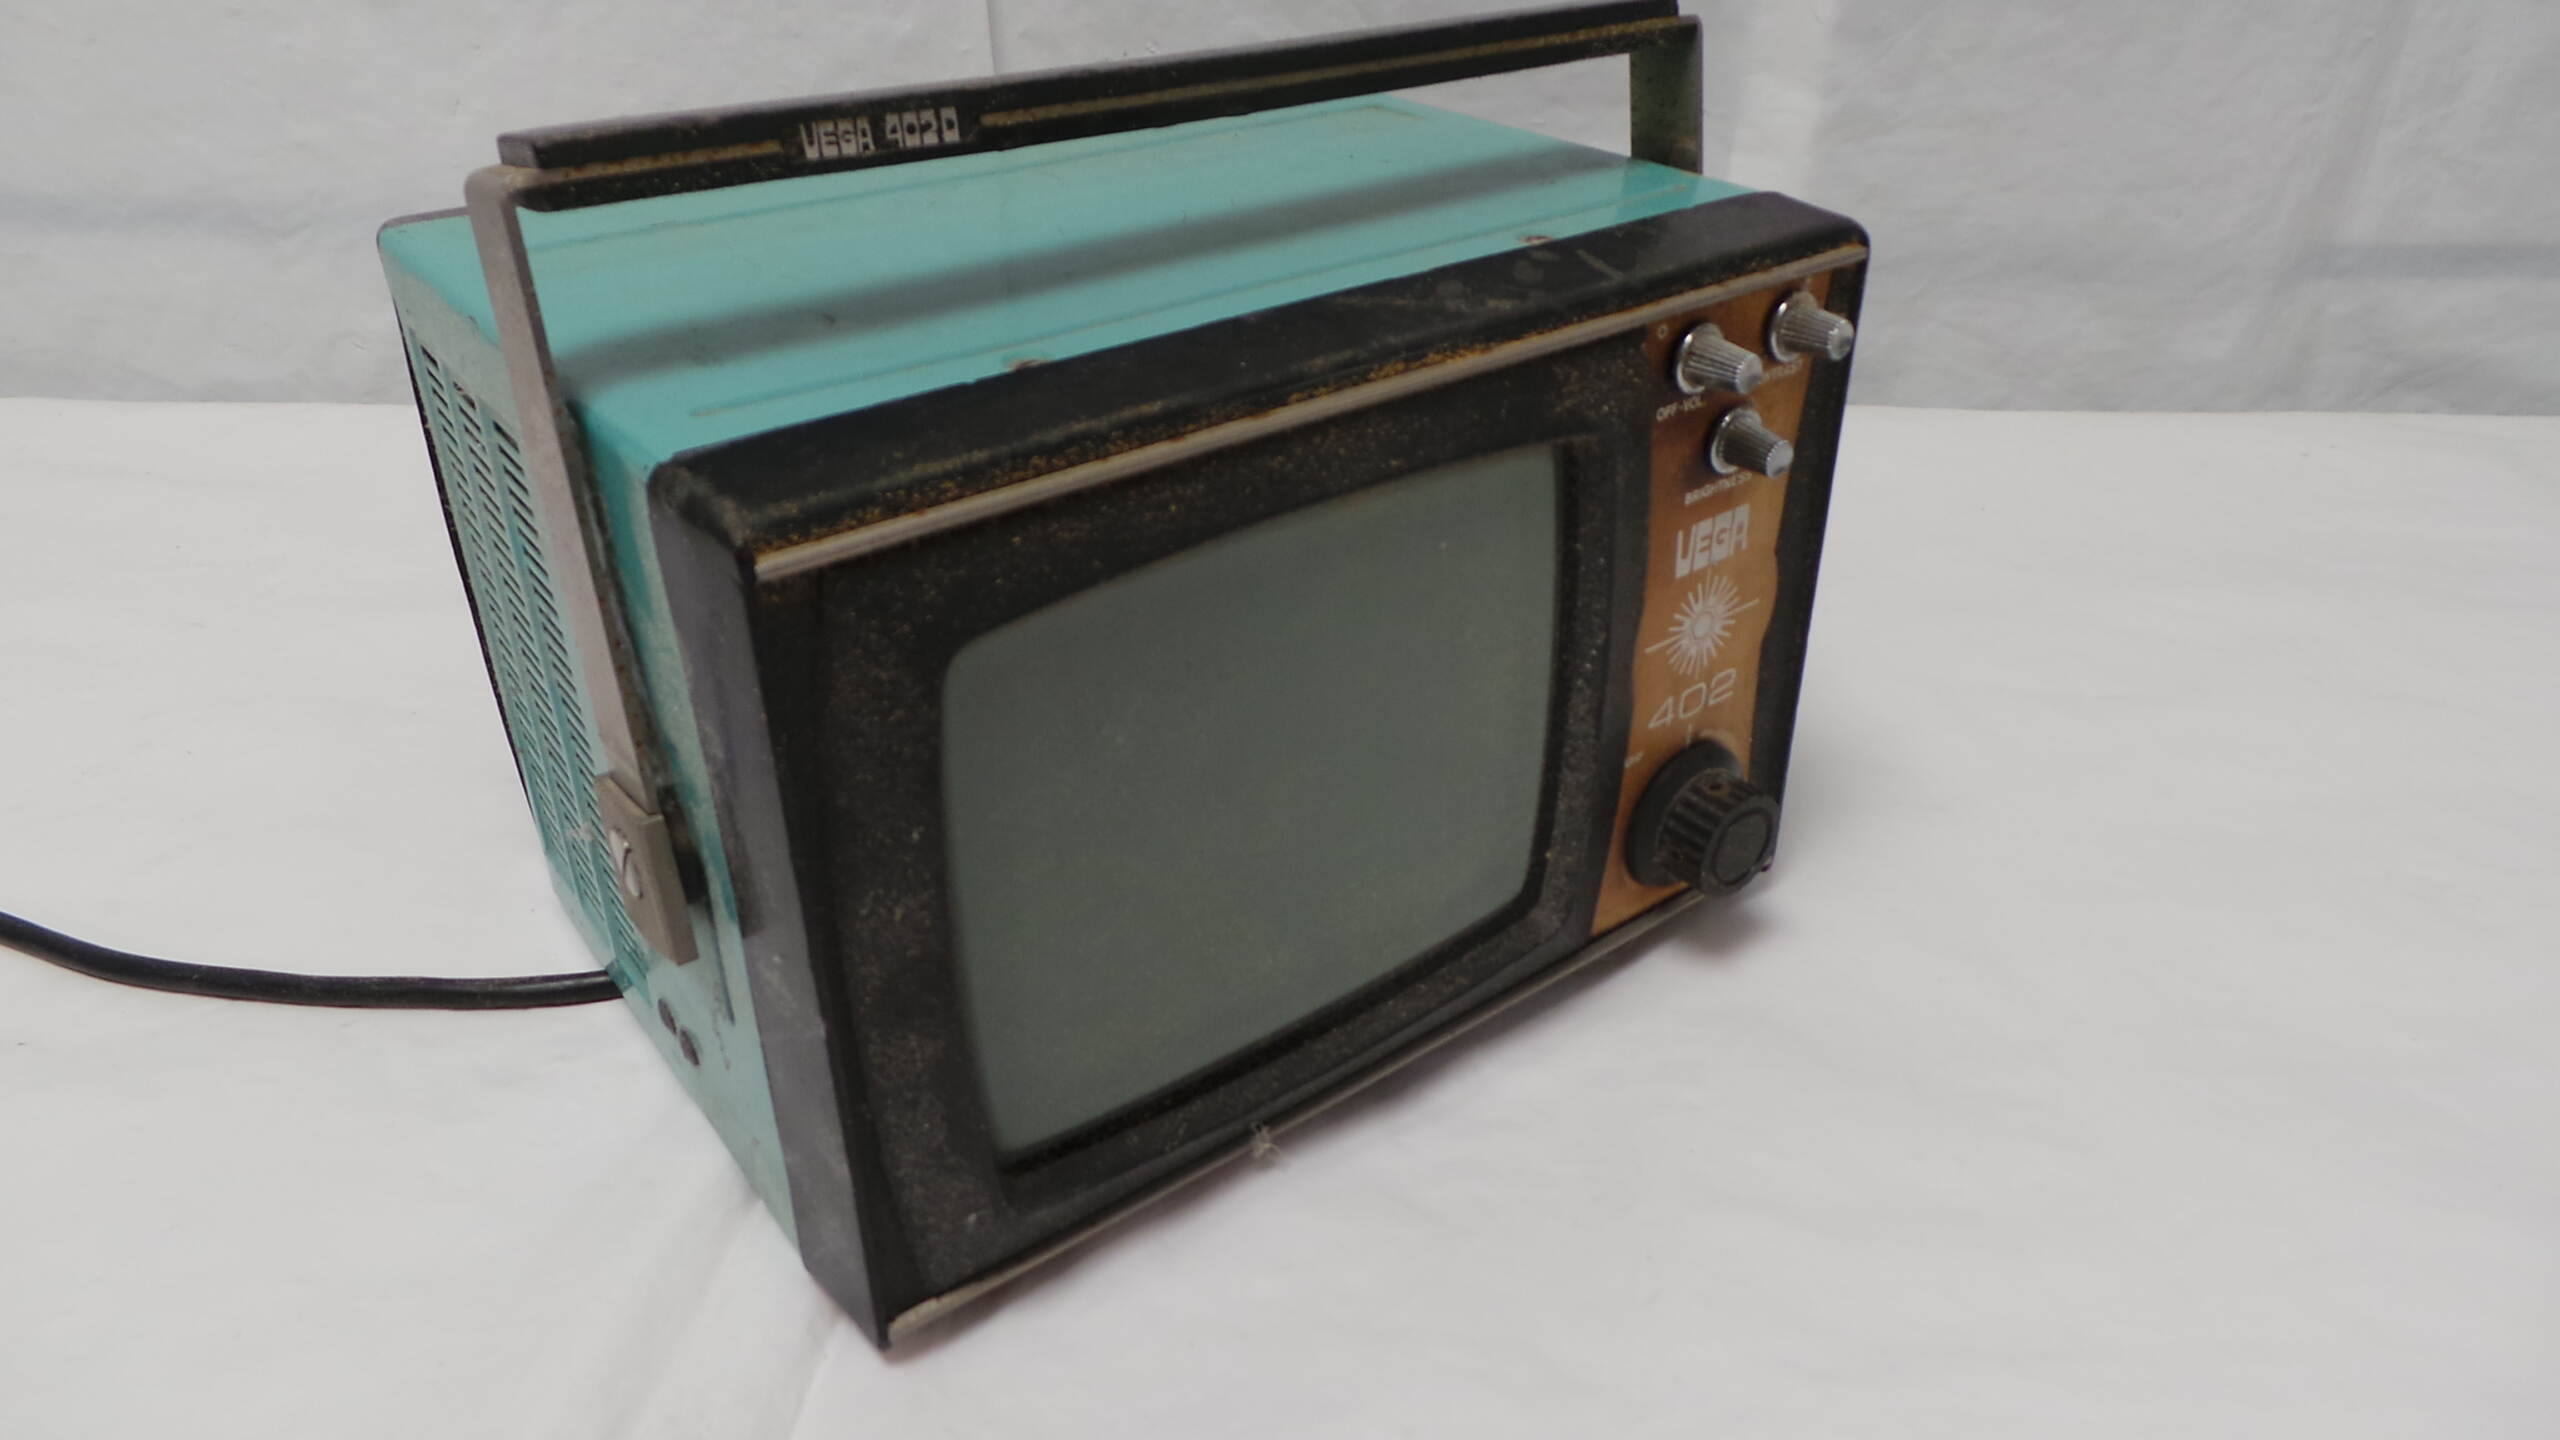 Vega 402 Portable TV Sold As Seen Junksale Clearance